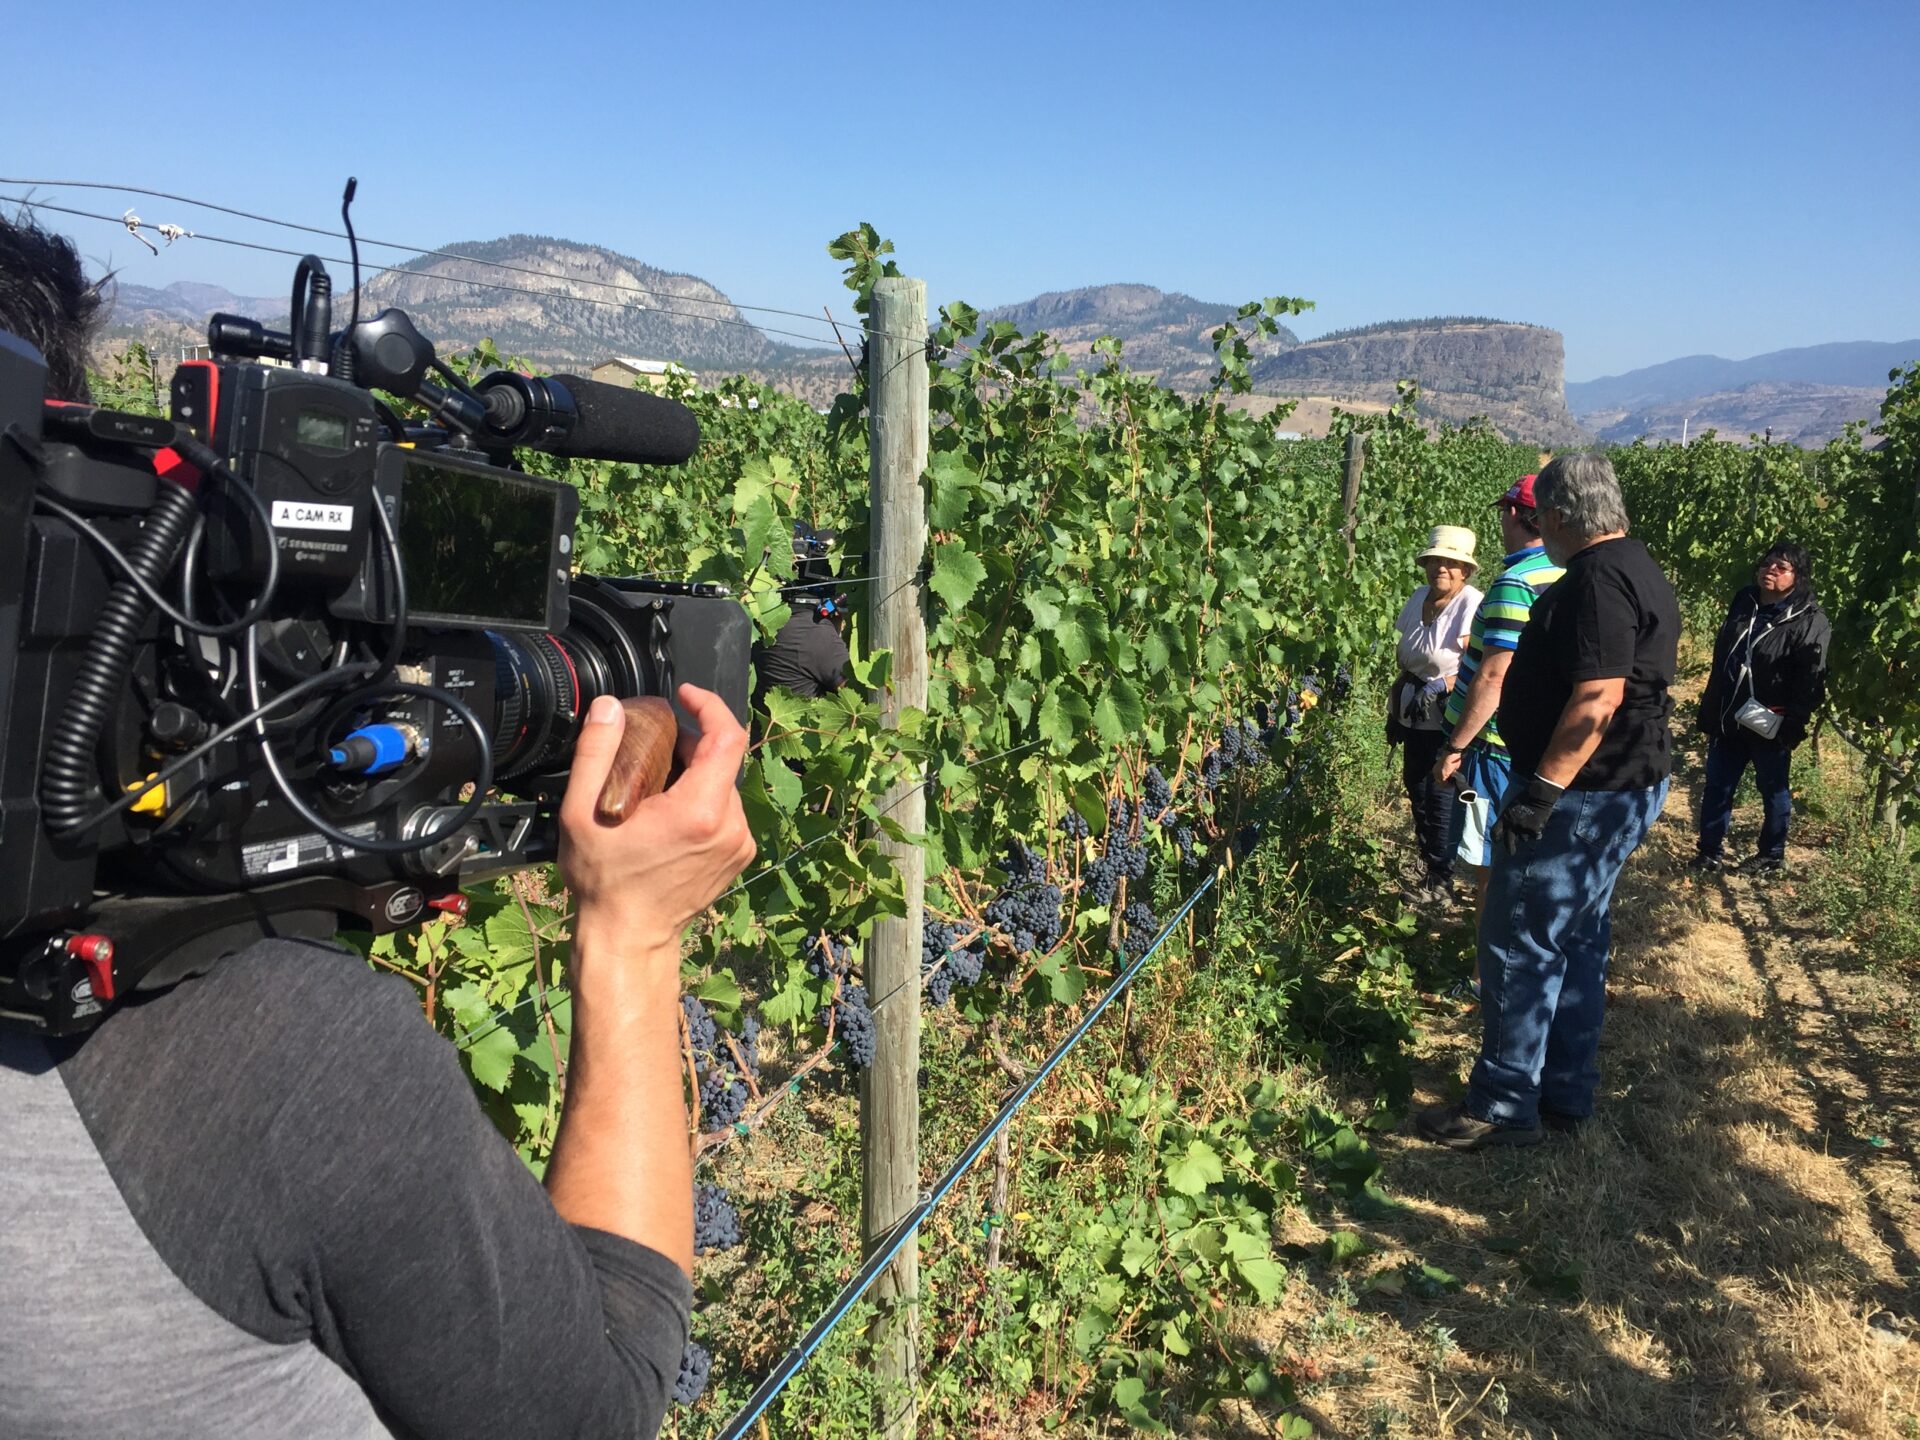 Filming in a grape vineyard.